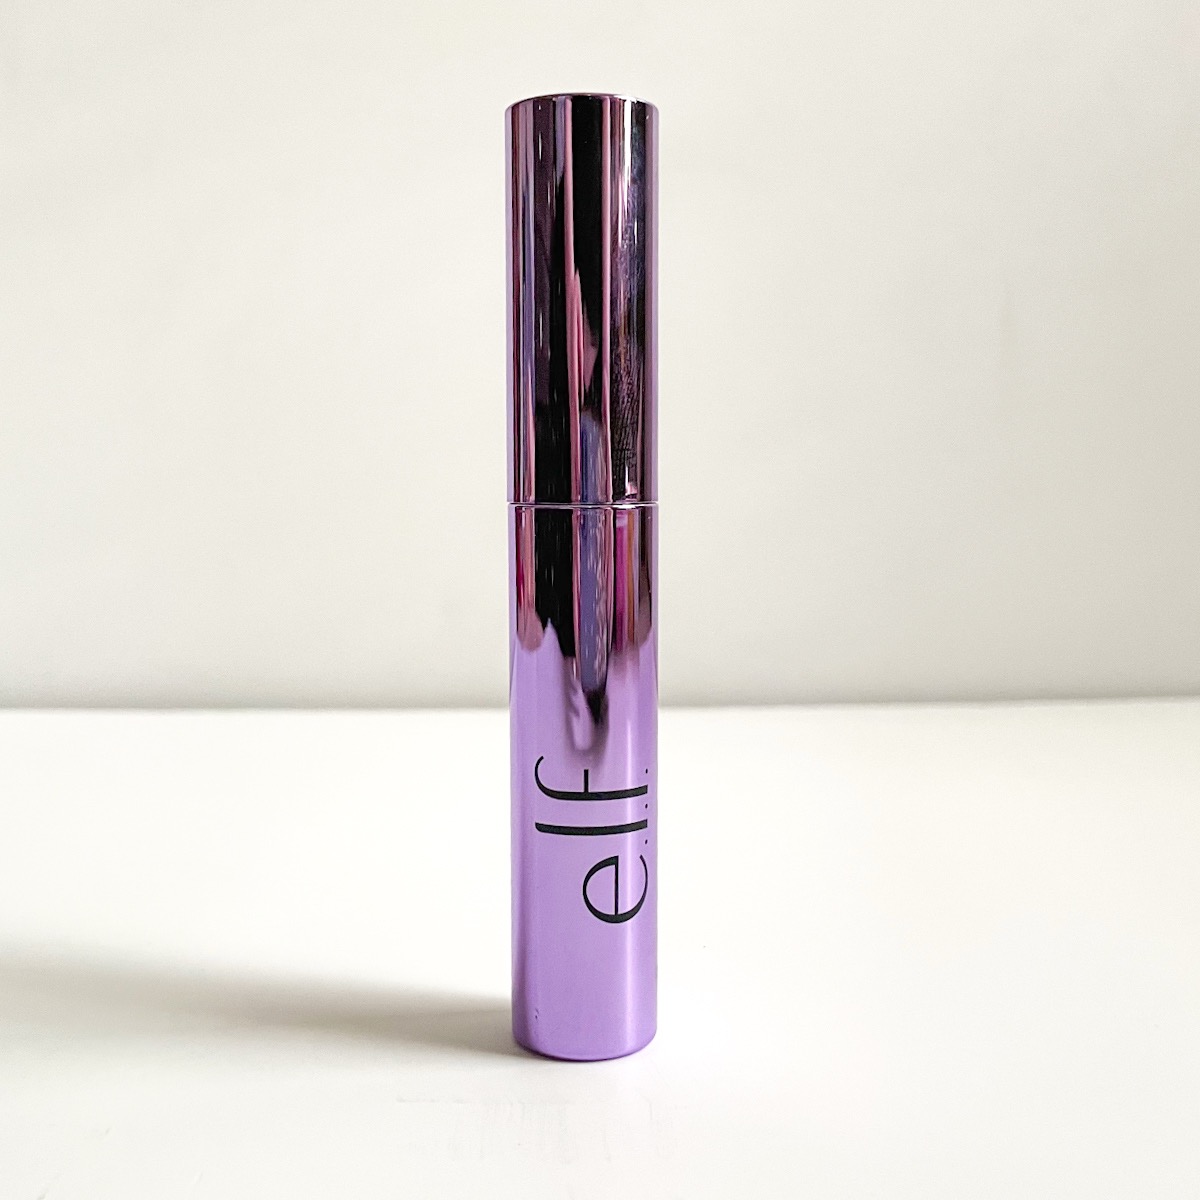 metallic purple mascara tube with e.l.f. label visible